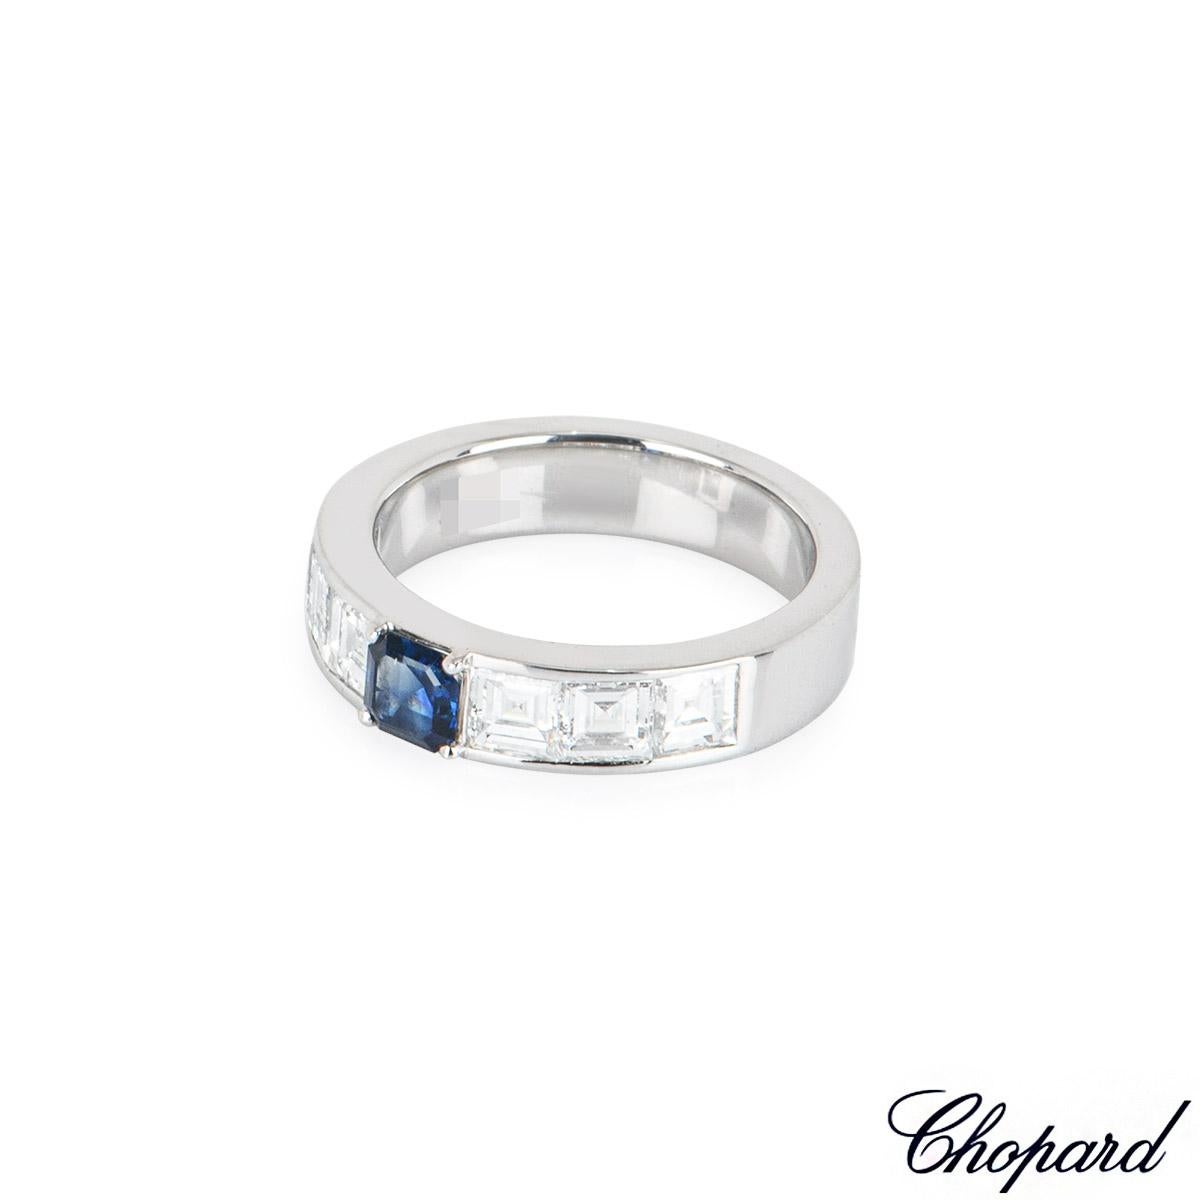 Round Cut Chopard White Gold Sapphire & Diamond Ring 82/6622-1111 For Sale